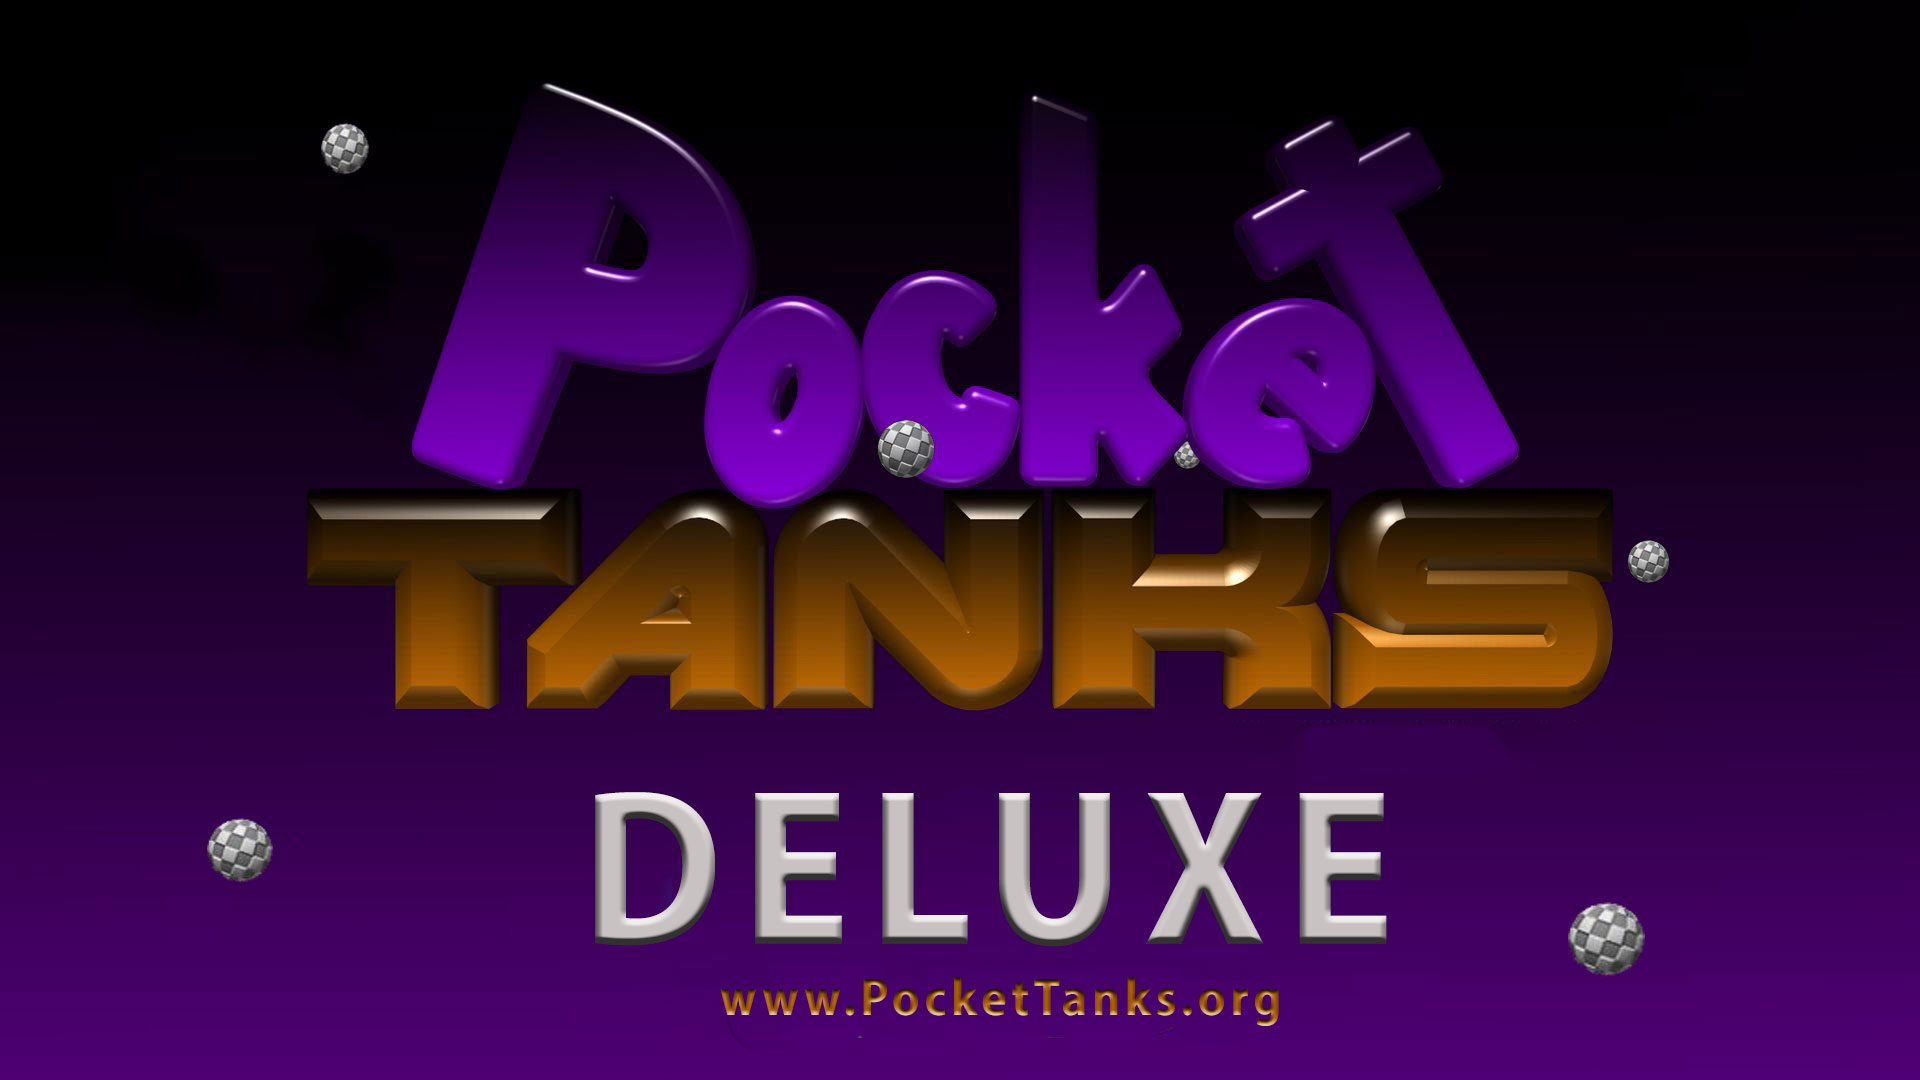 pocket tanks deluxe free download full version apk